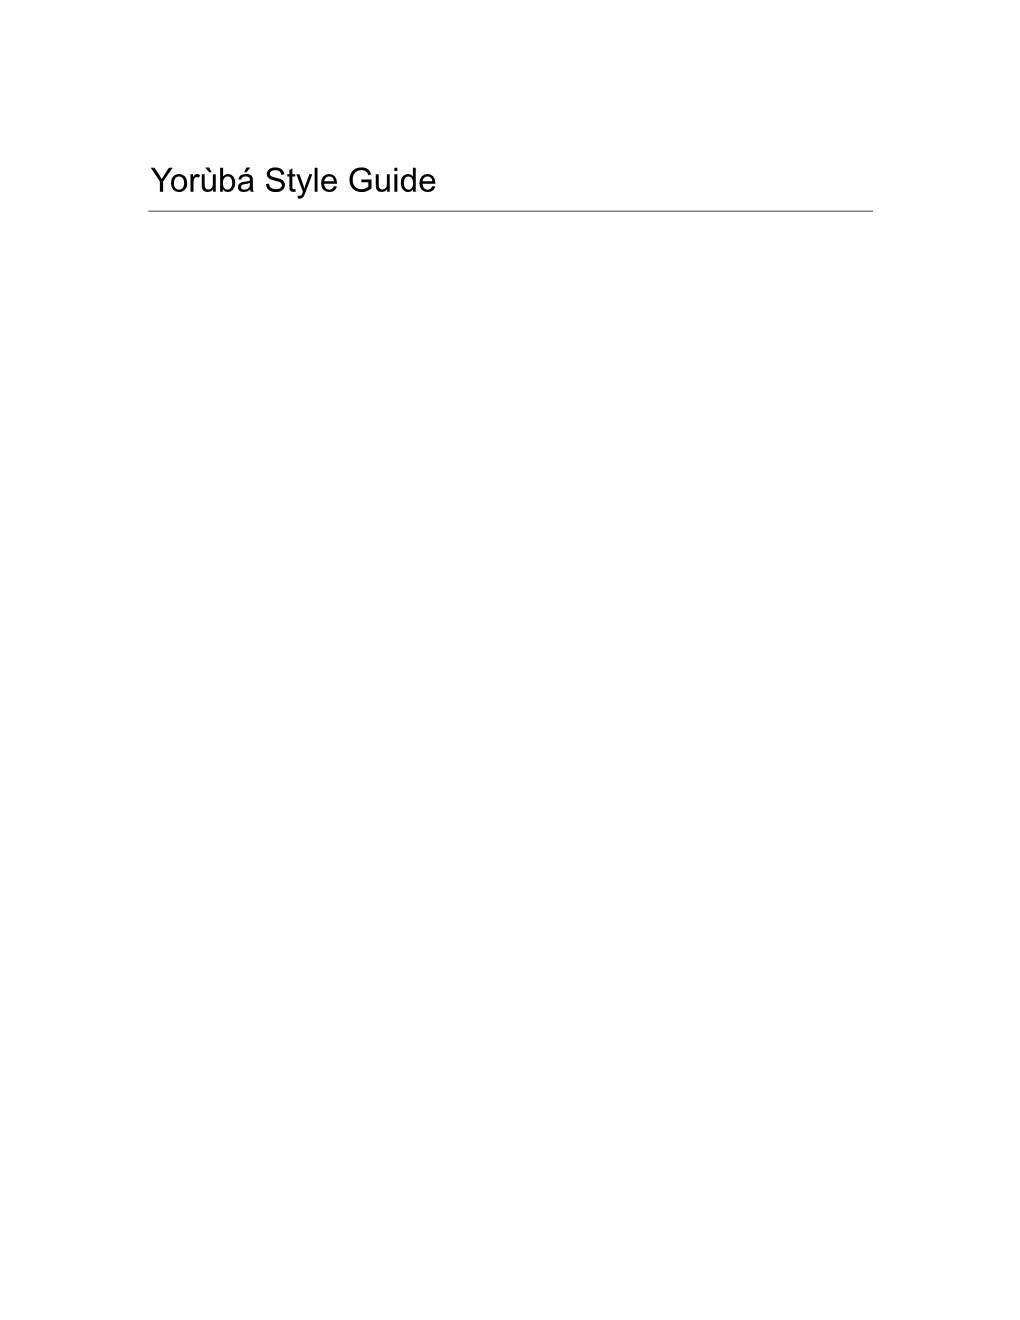 Yorùbá Style Guide Contents